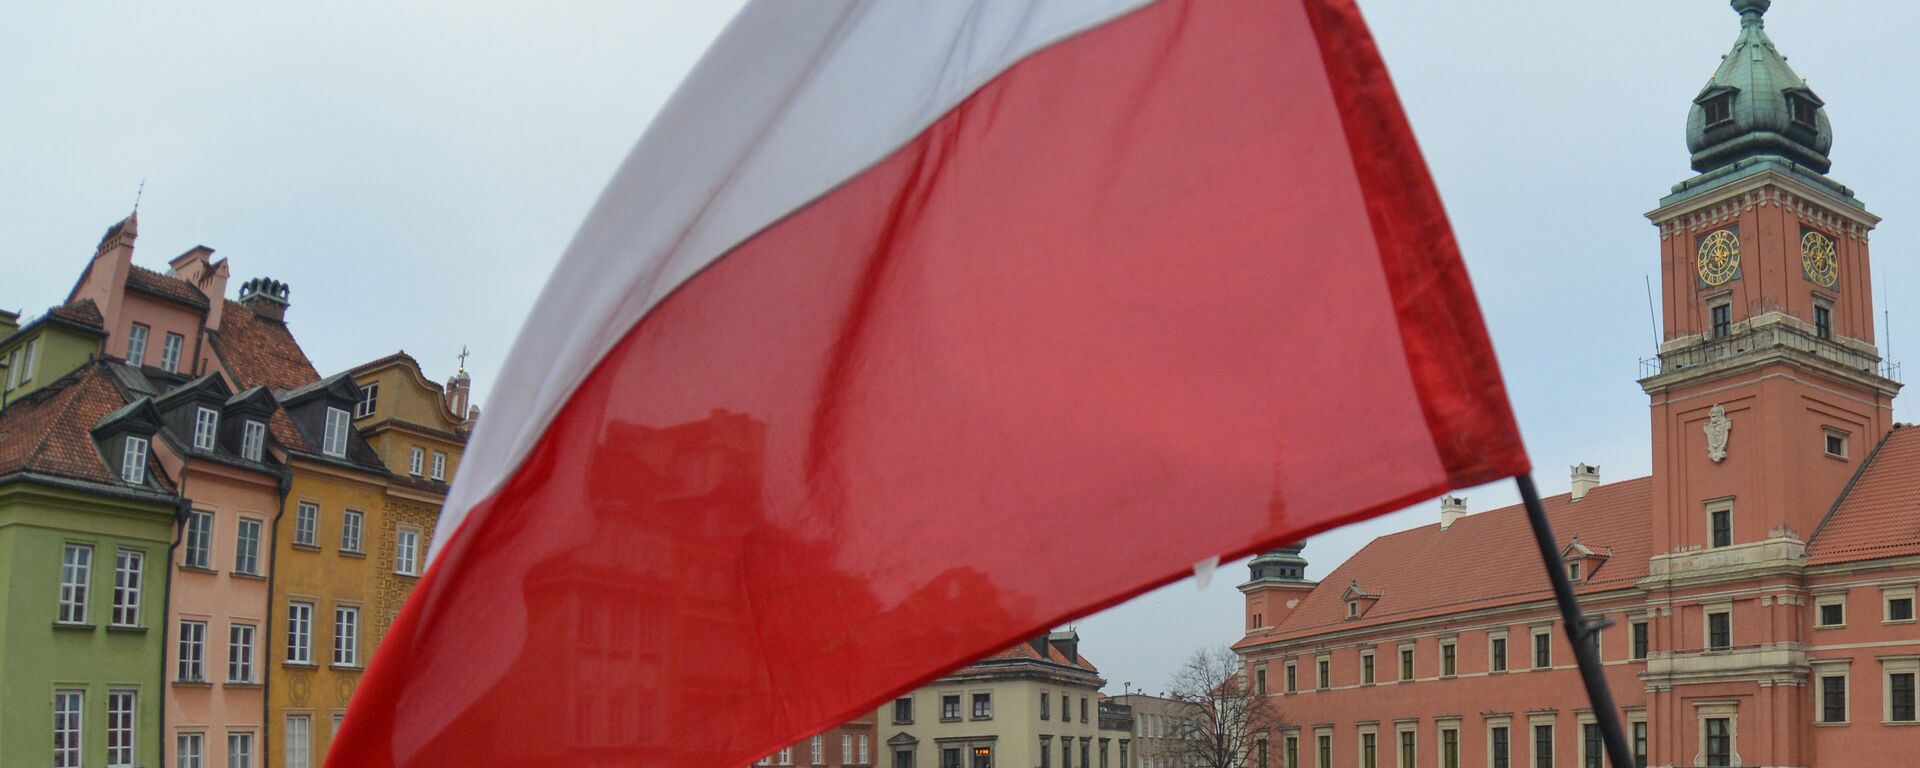 Флаг Польши - Sputnik Latvija, 1920, 05.12.2020